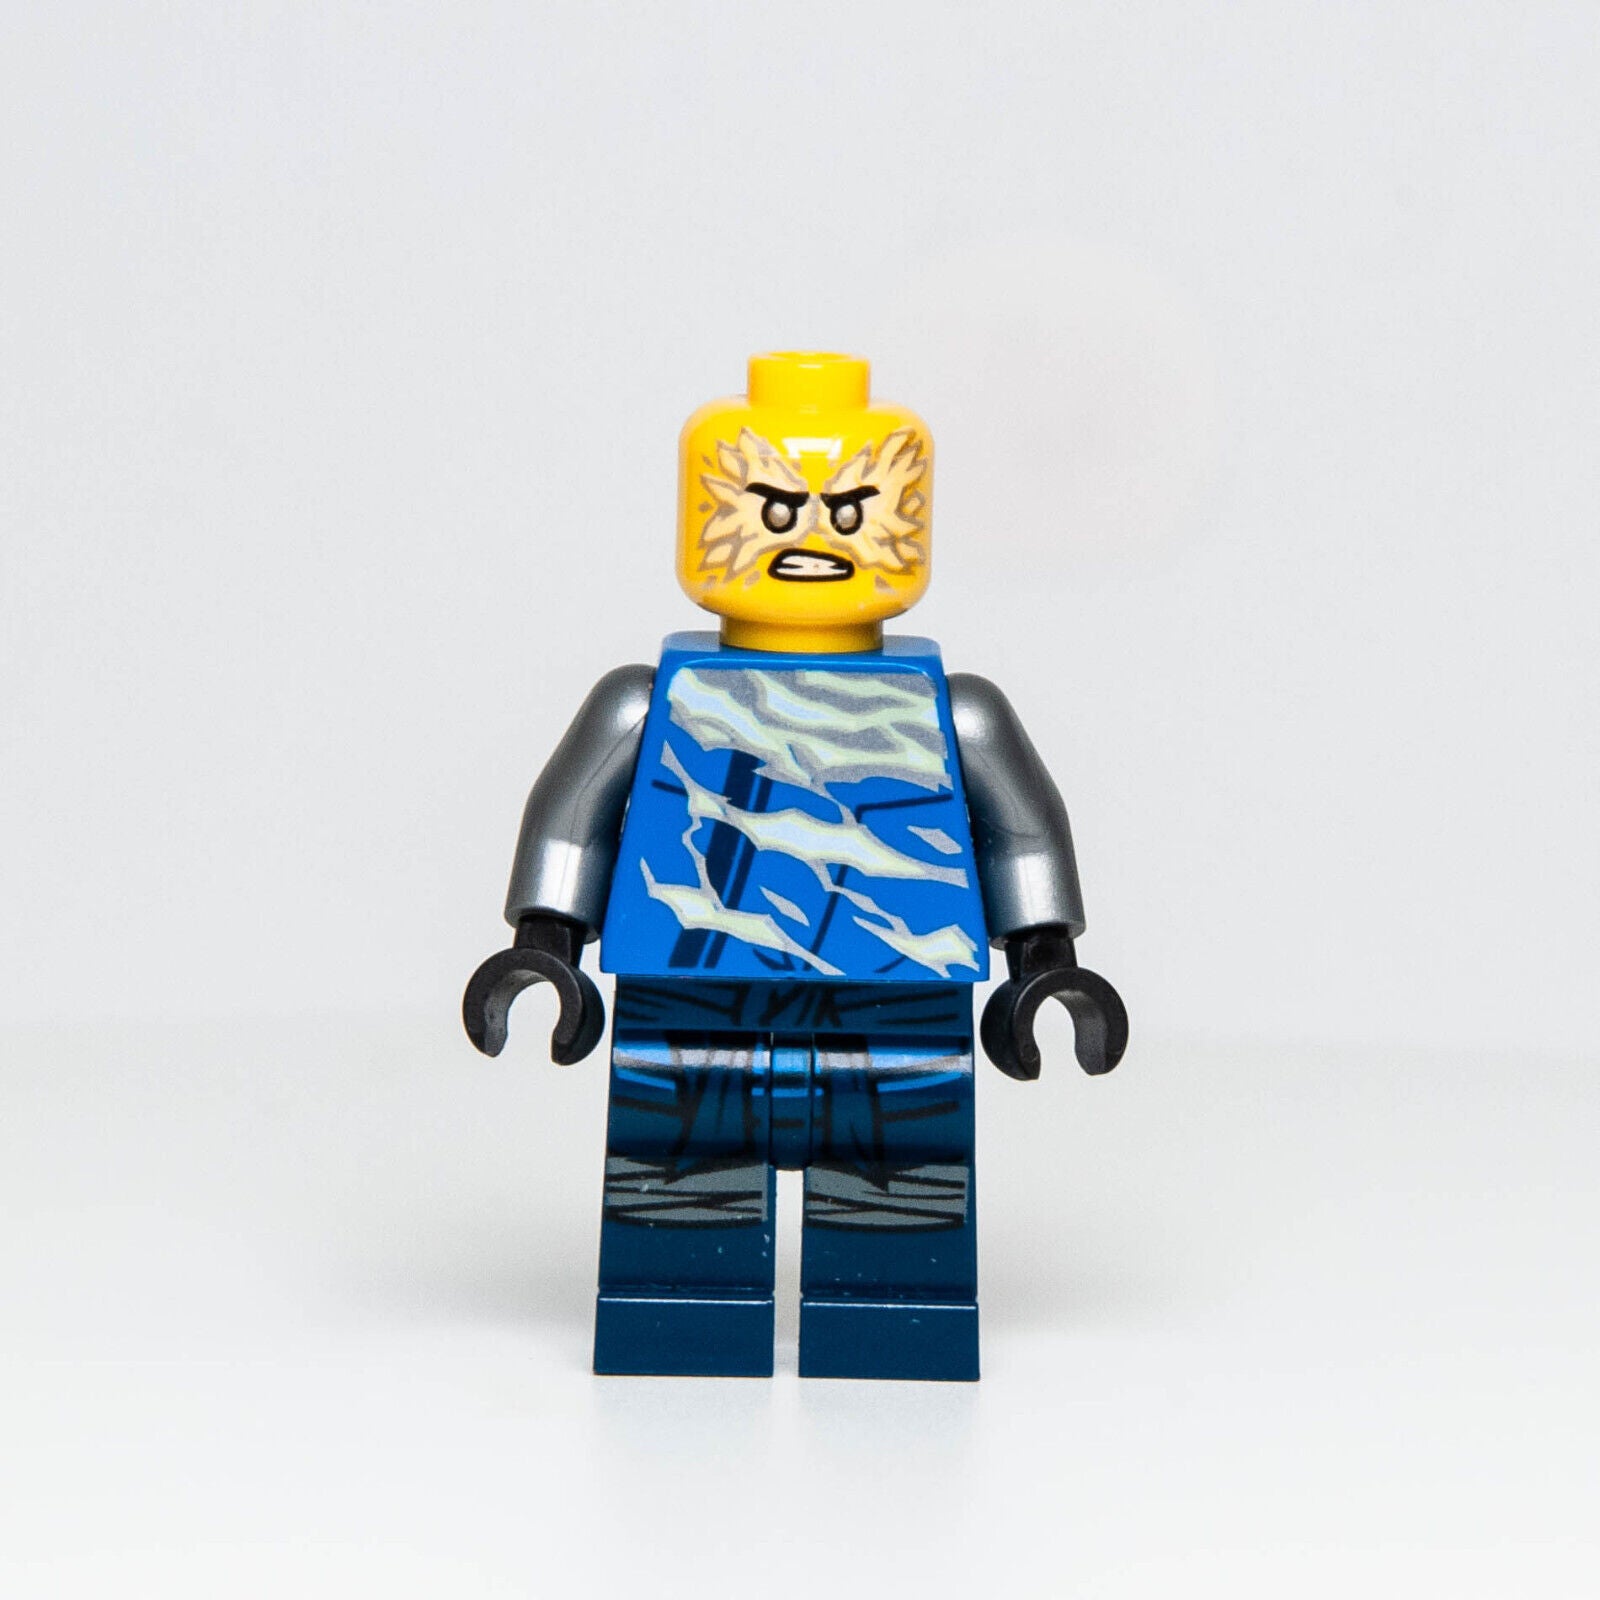 LEGO Ninjago Minifigure - Jay FS (Spinjitzu Slam) njo534 70682